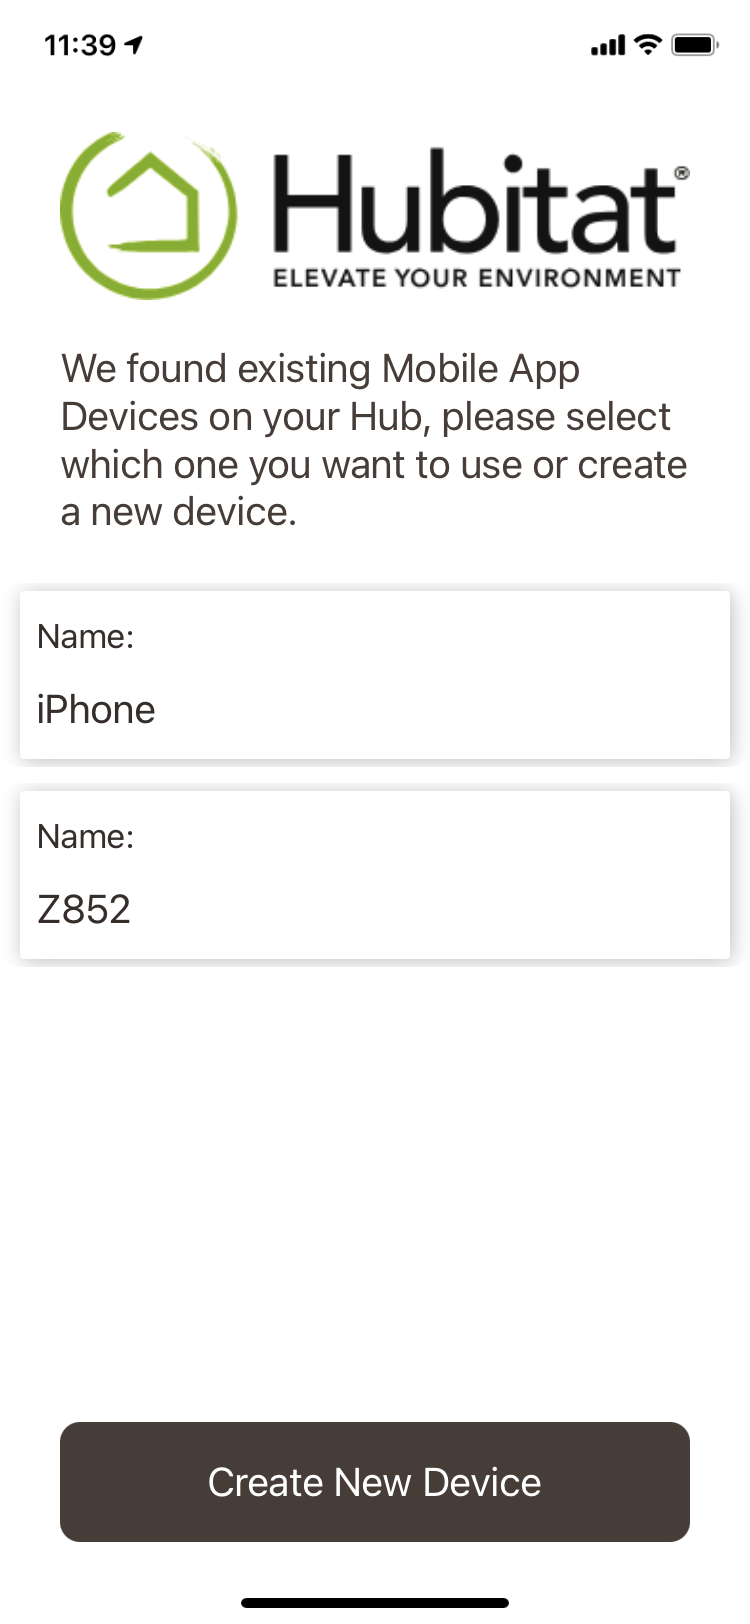 Screenshot of "Create New Device" (for mobile app device) in Hubitat mobile app